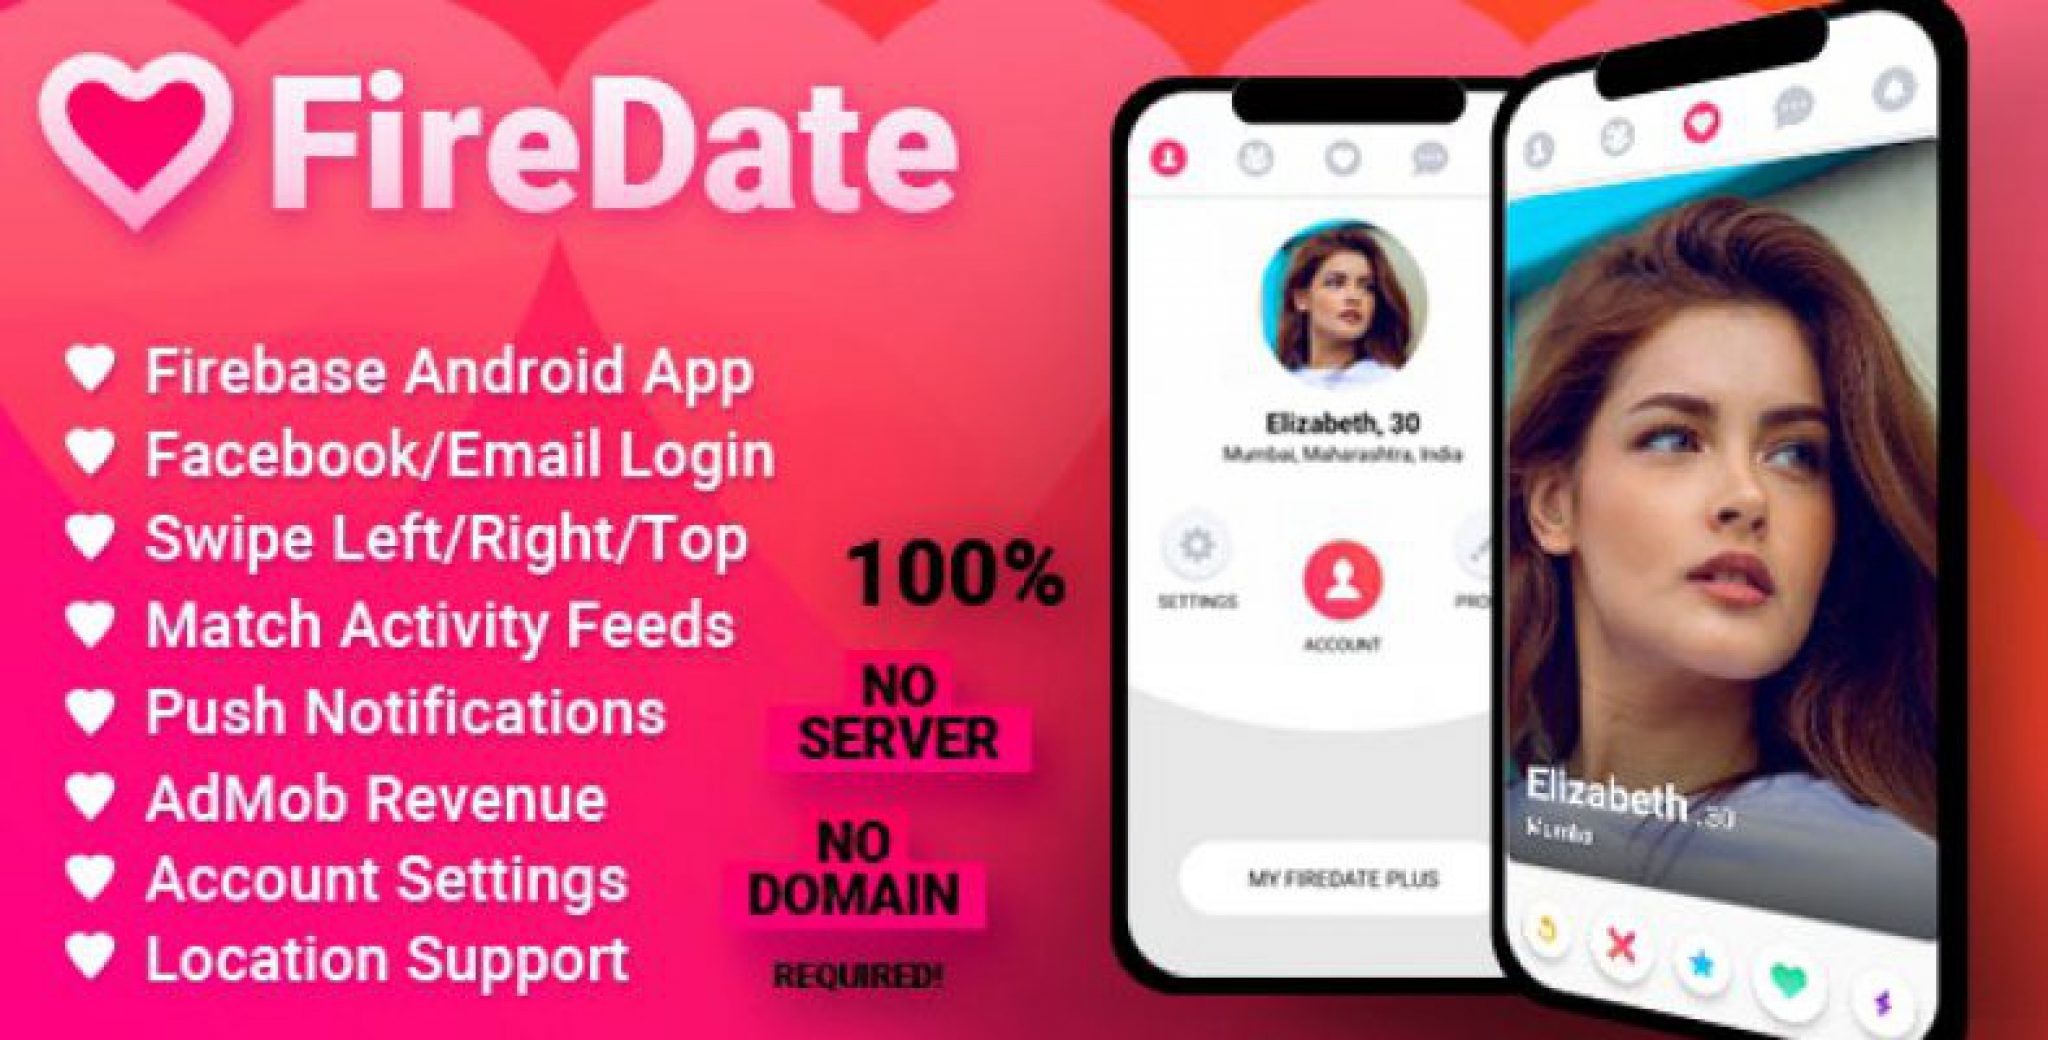 FireDate-Android-Firebase-Dating-Application-788x400-1-2048x1040.jpg